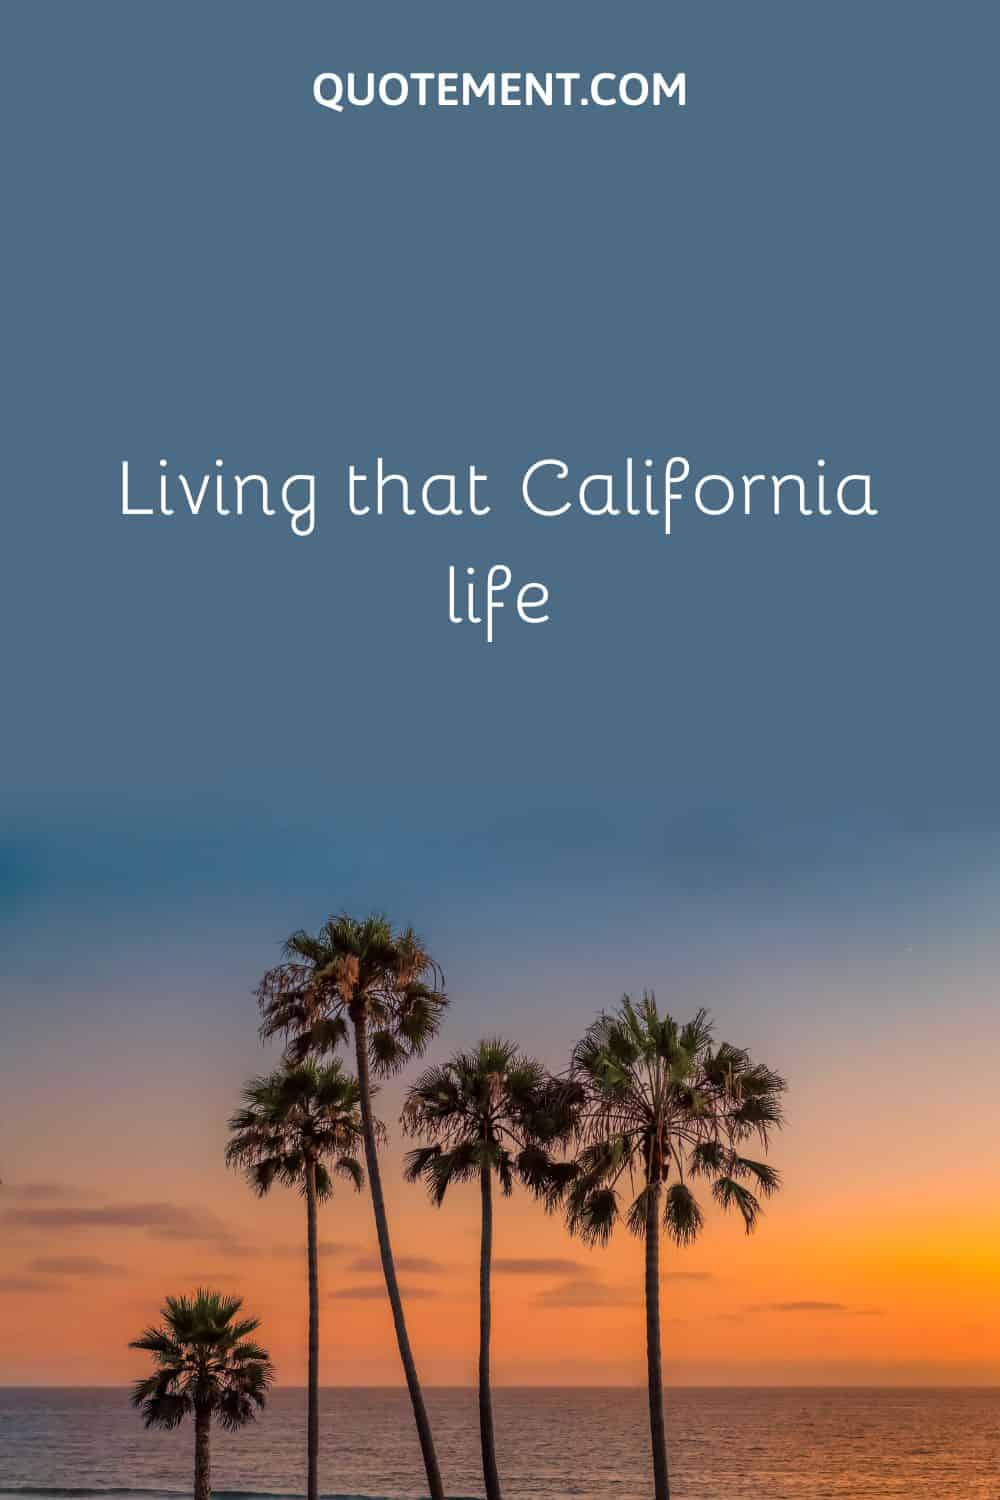 Living that California life